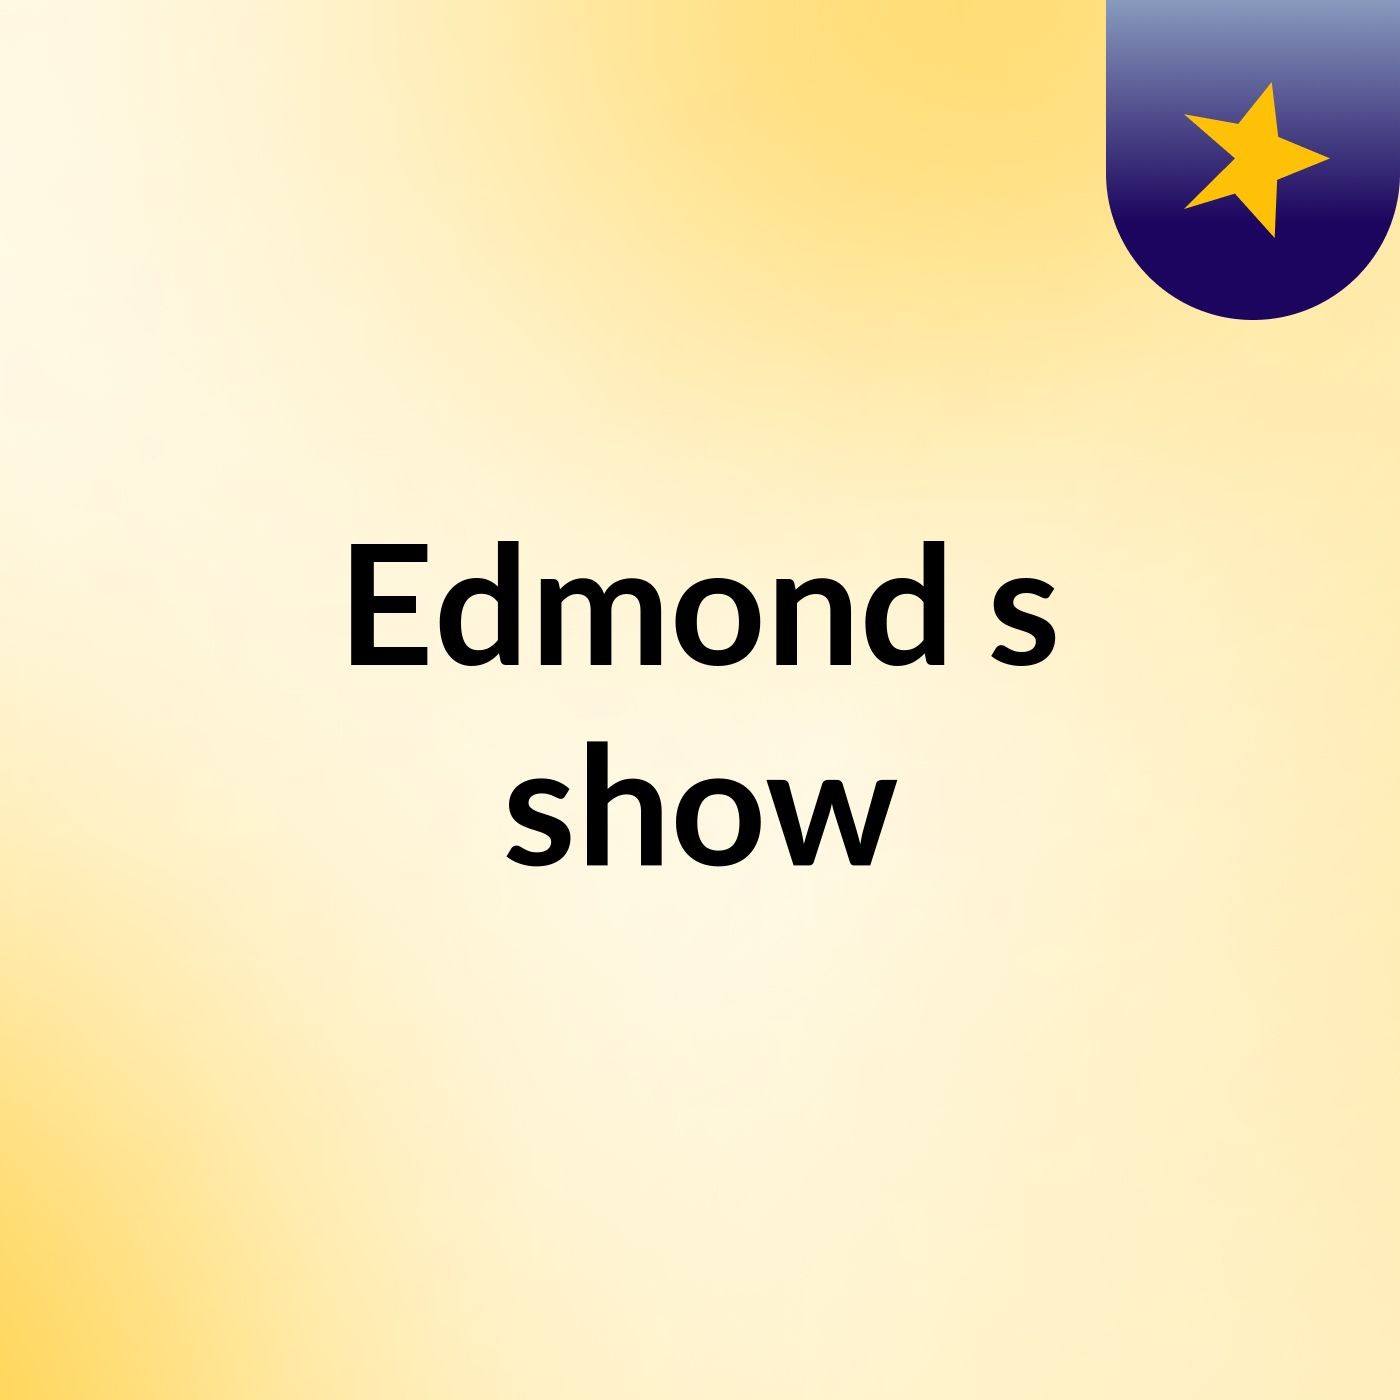 Edmond's show